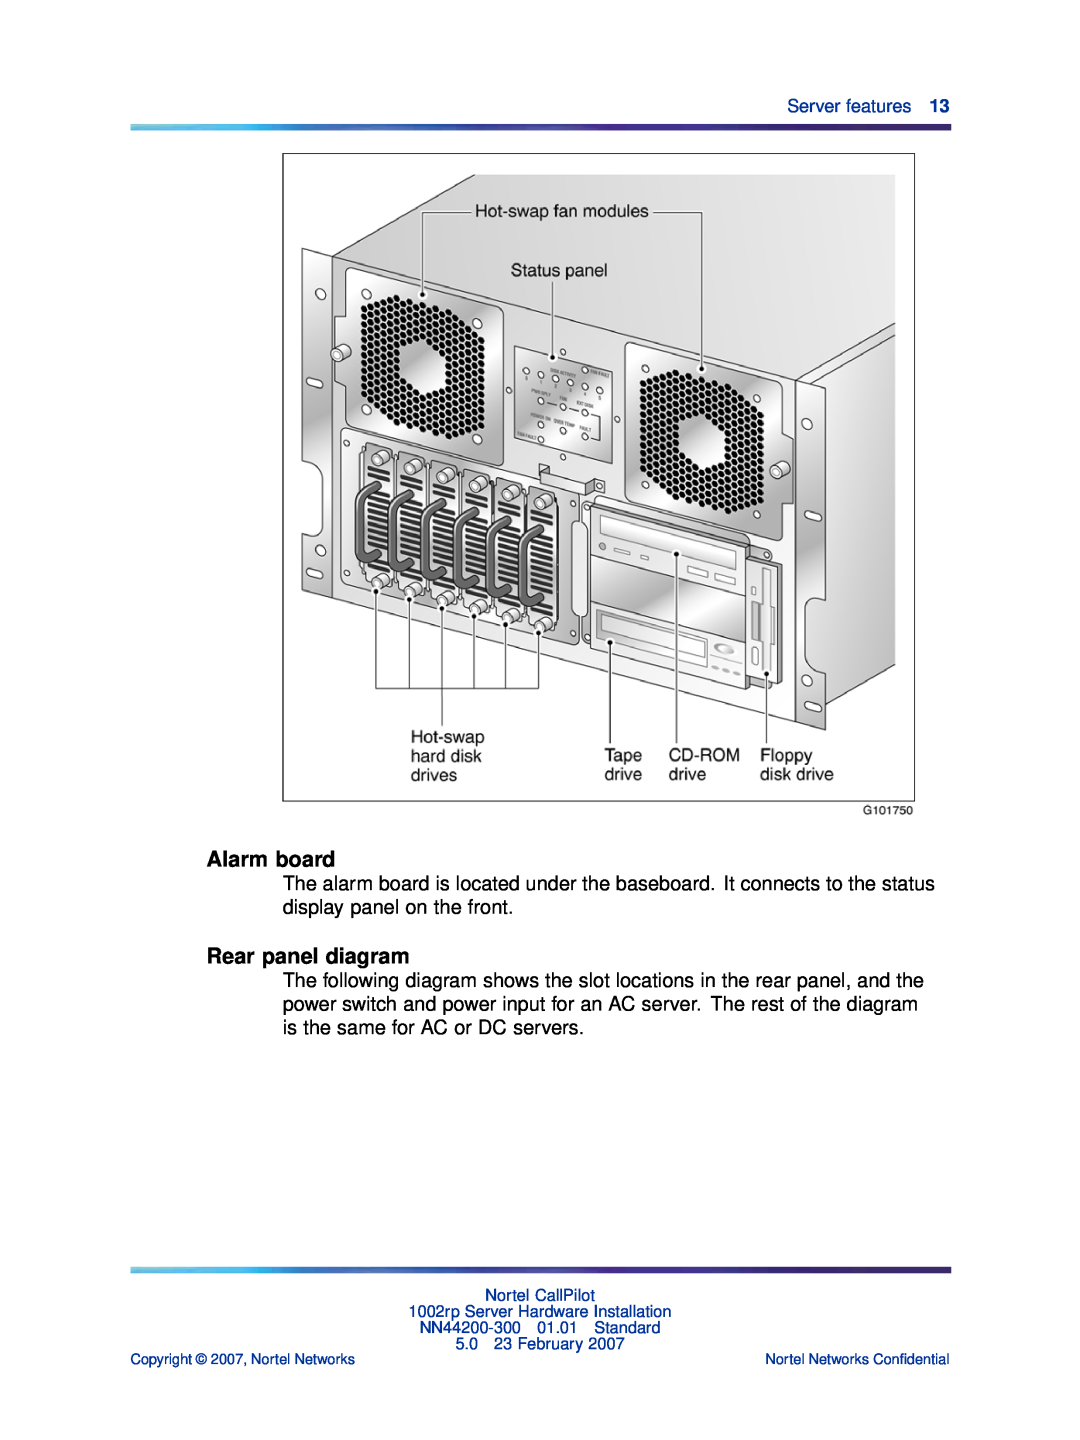 Nortel Networks NN44200-300 manual Alarm board, Rear panel diagram, Server features 